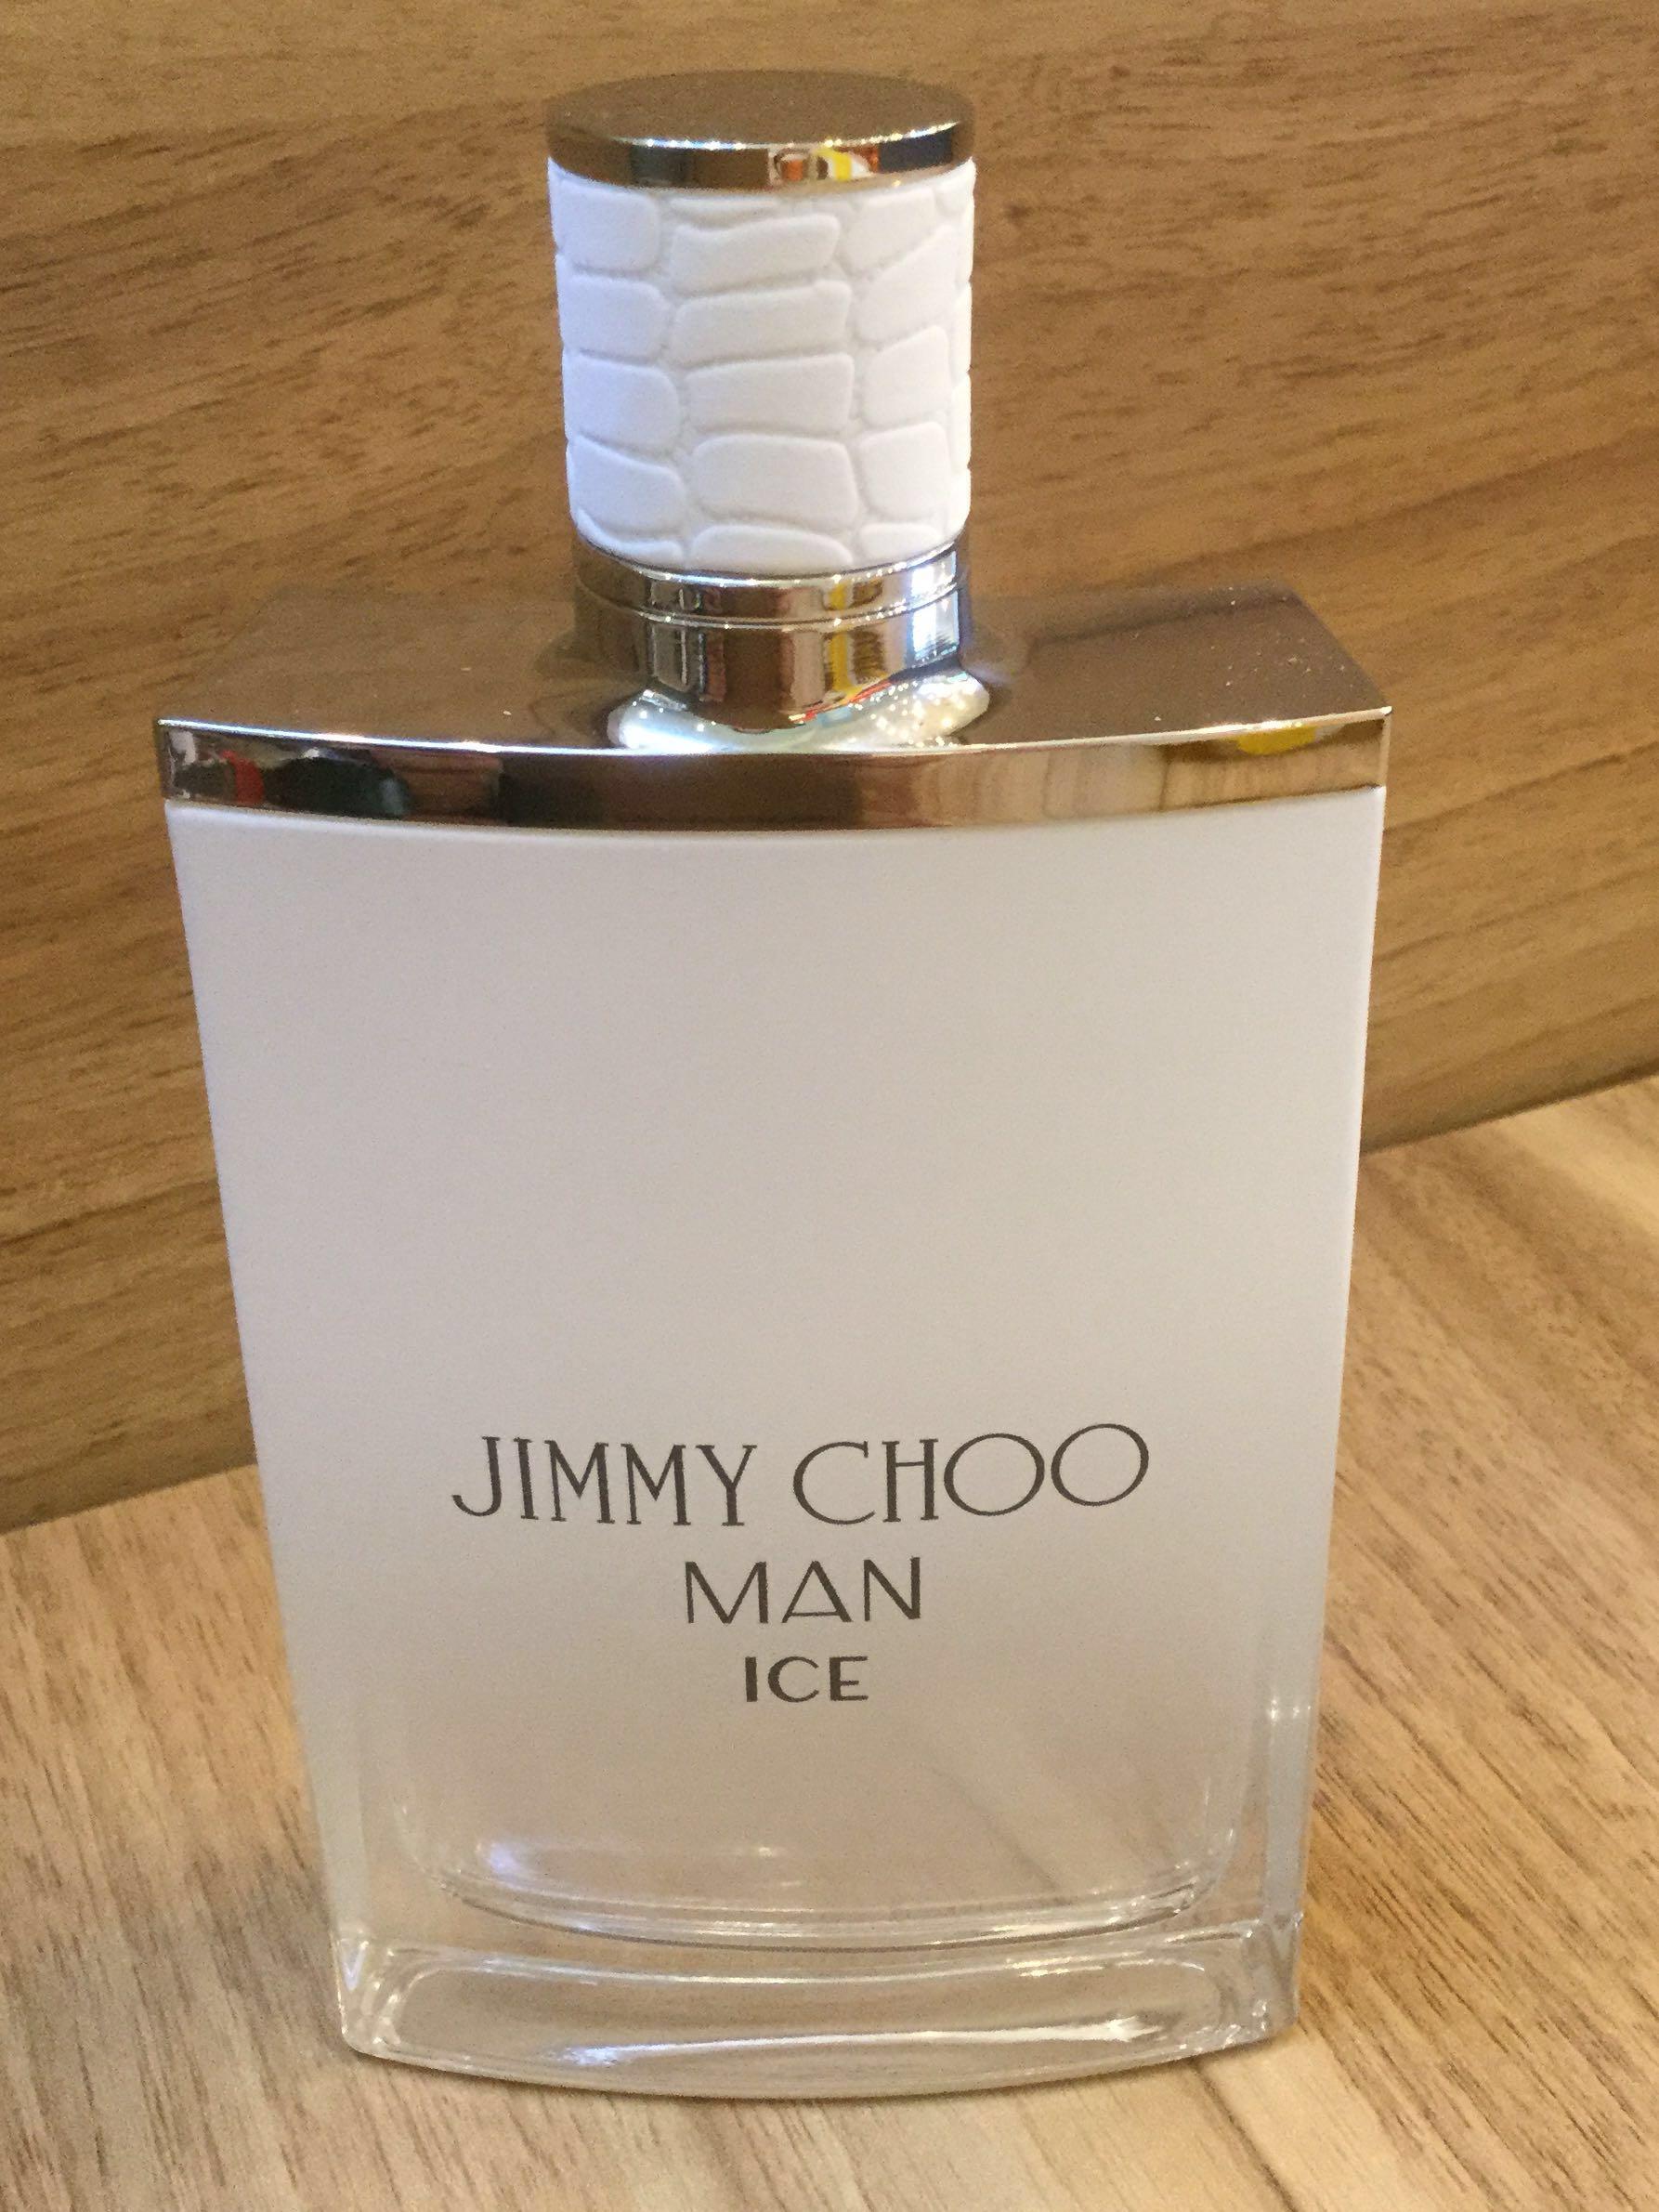 Jimmy Choo Man Ice, Health \u0026 Beauty 